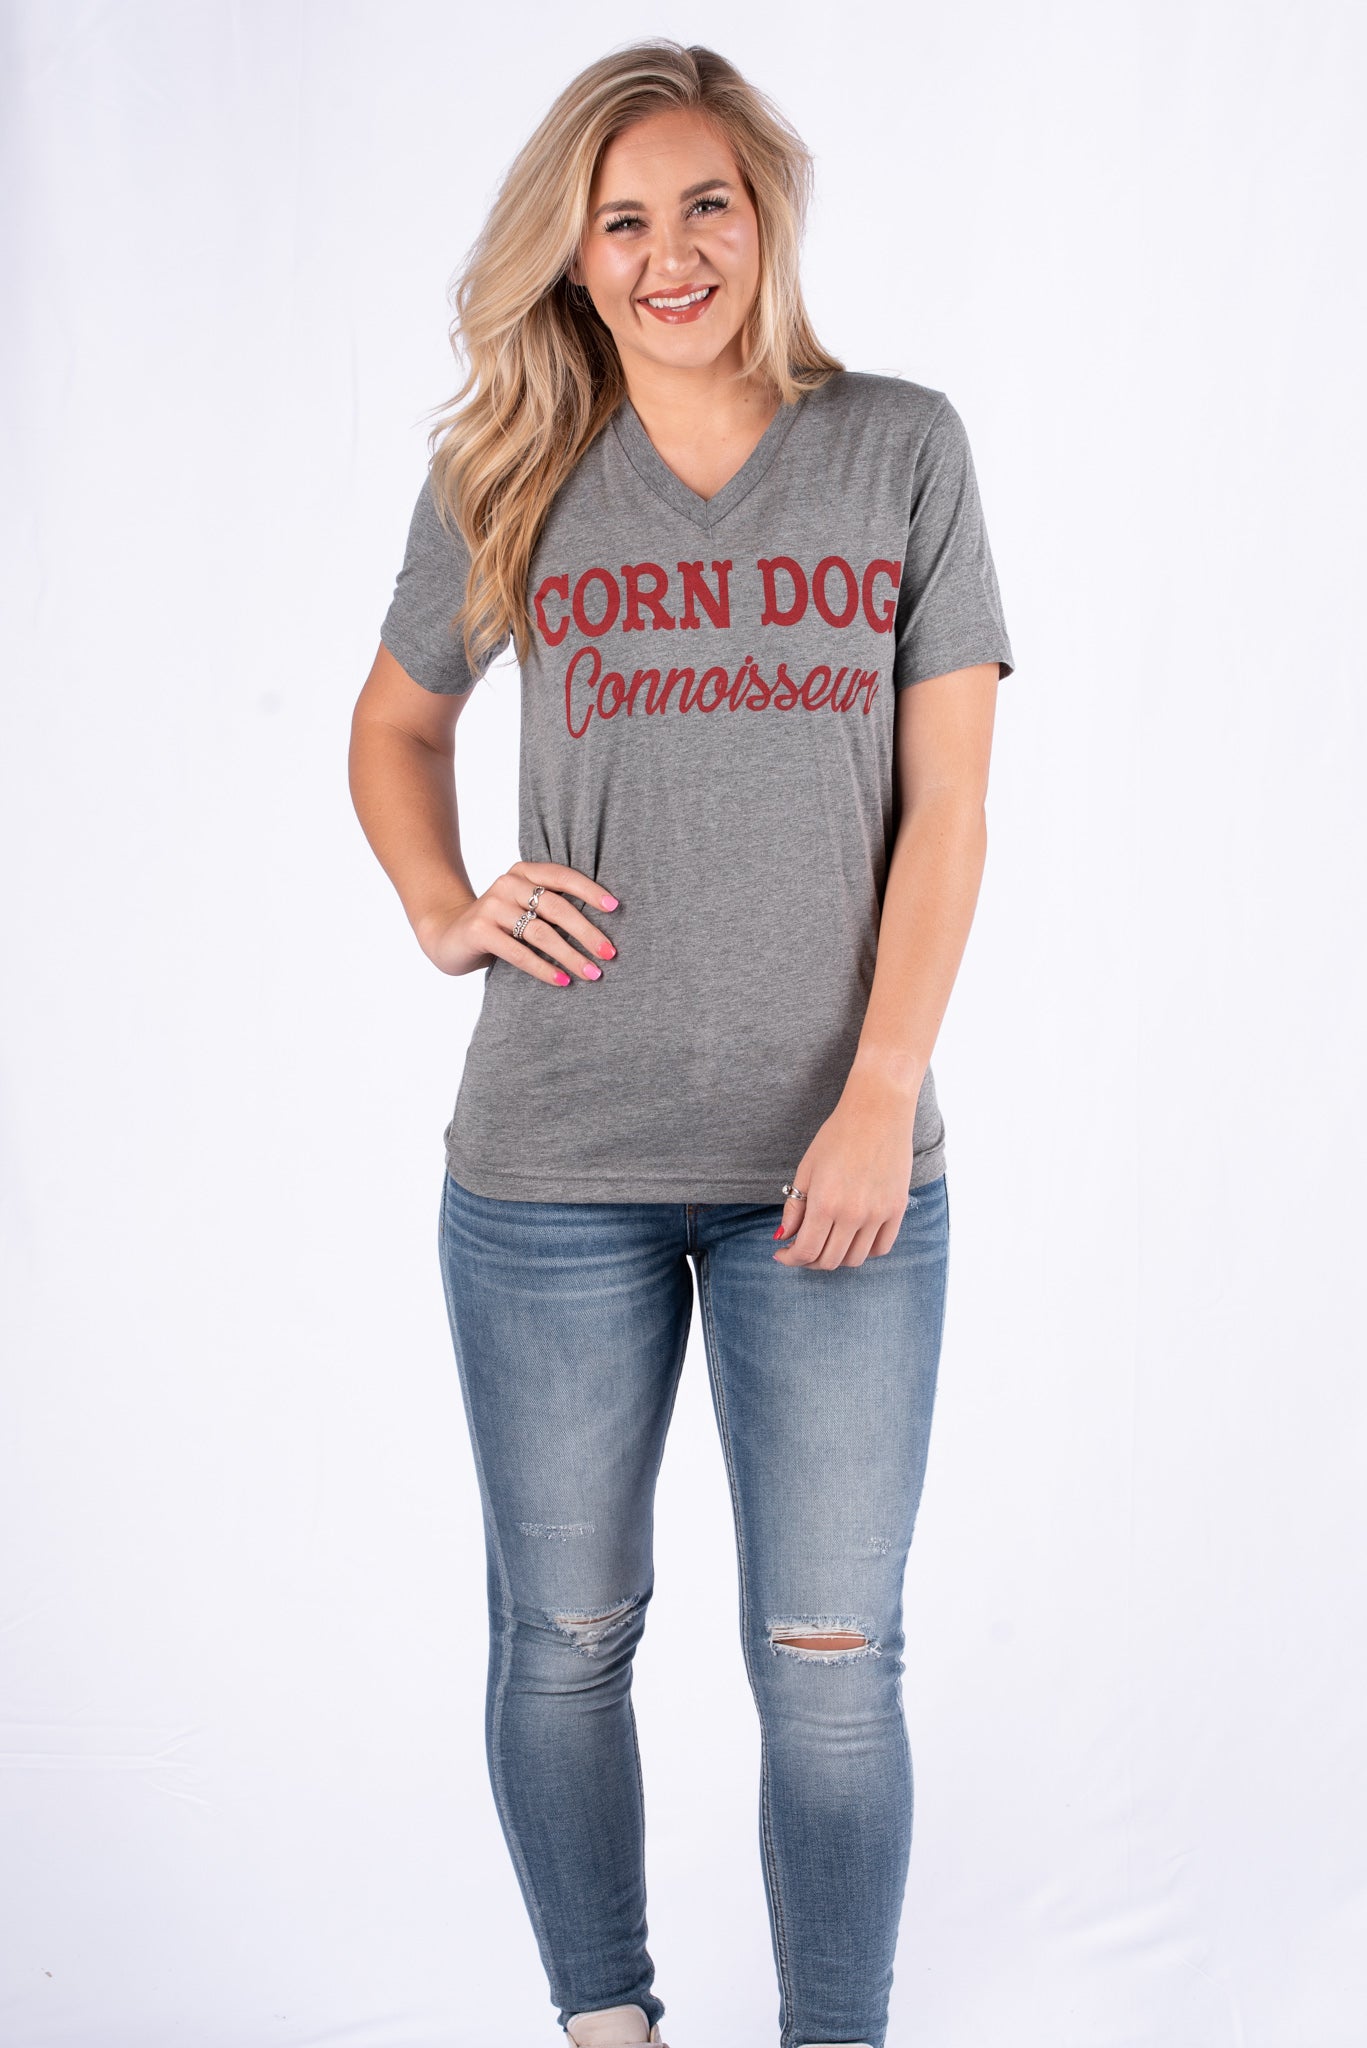 Corn dog connoisseur short sleeve v-neck t-shirt grey | Trendy Graphic ...